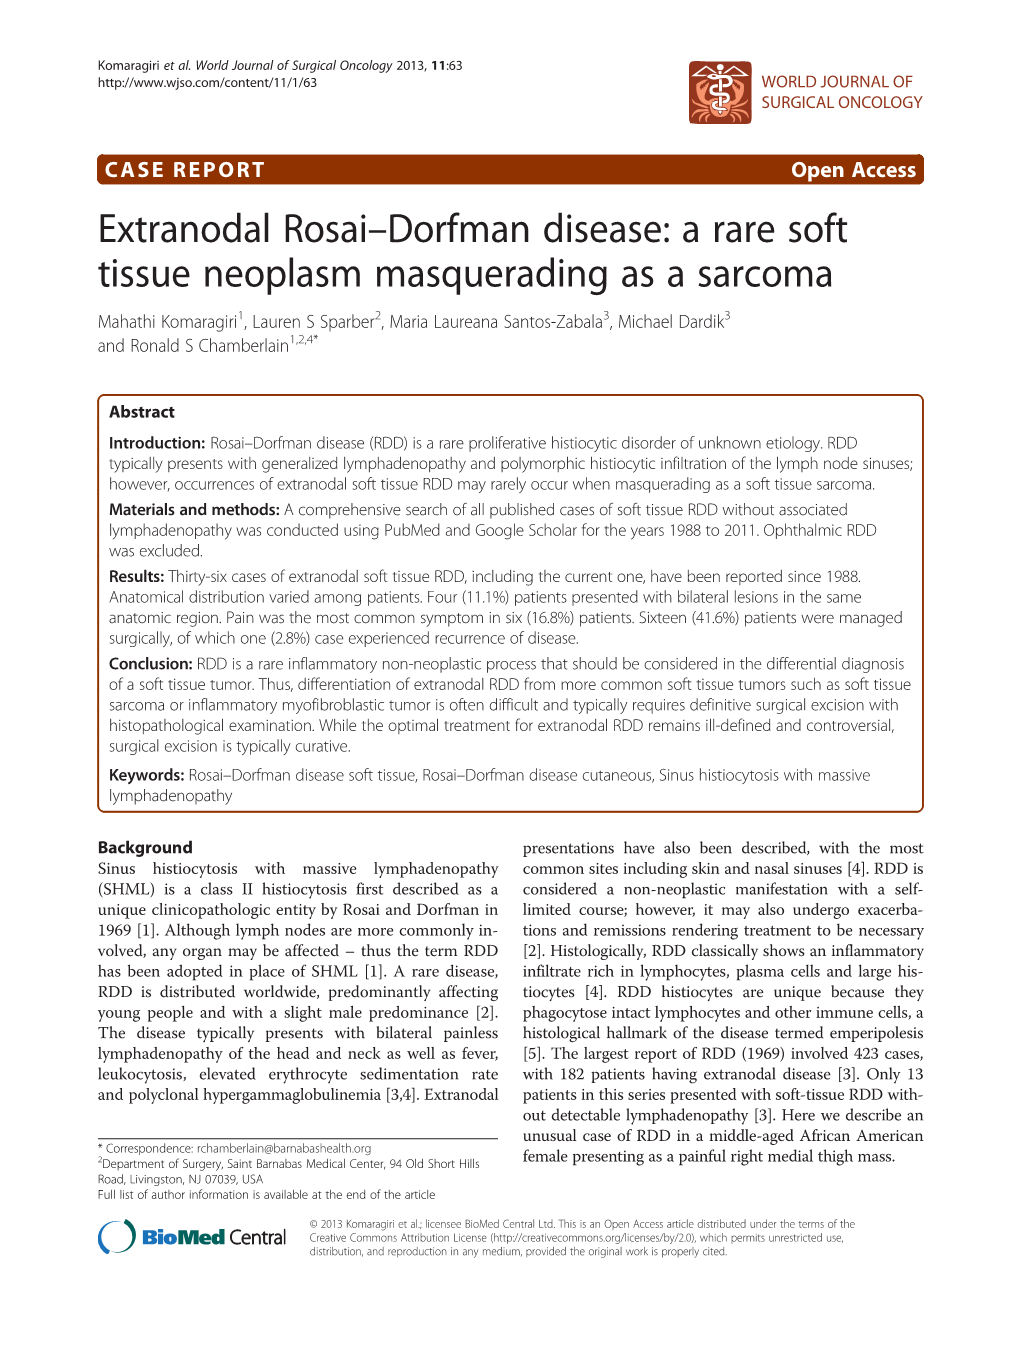 Extranodal Rosai-Dorfman Disease: a Rare Soft Tissue Neoplasm